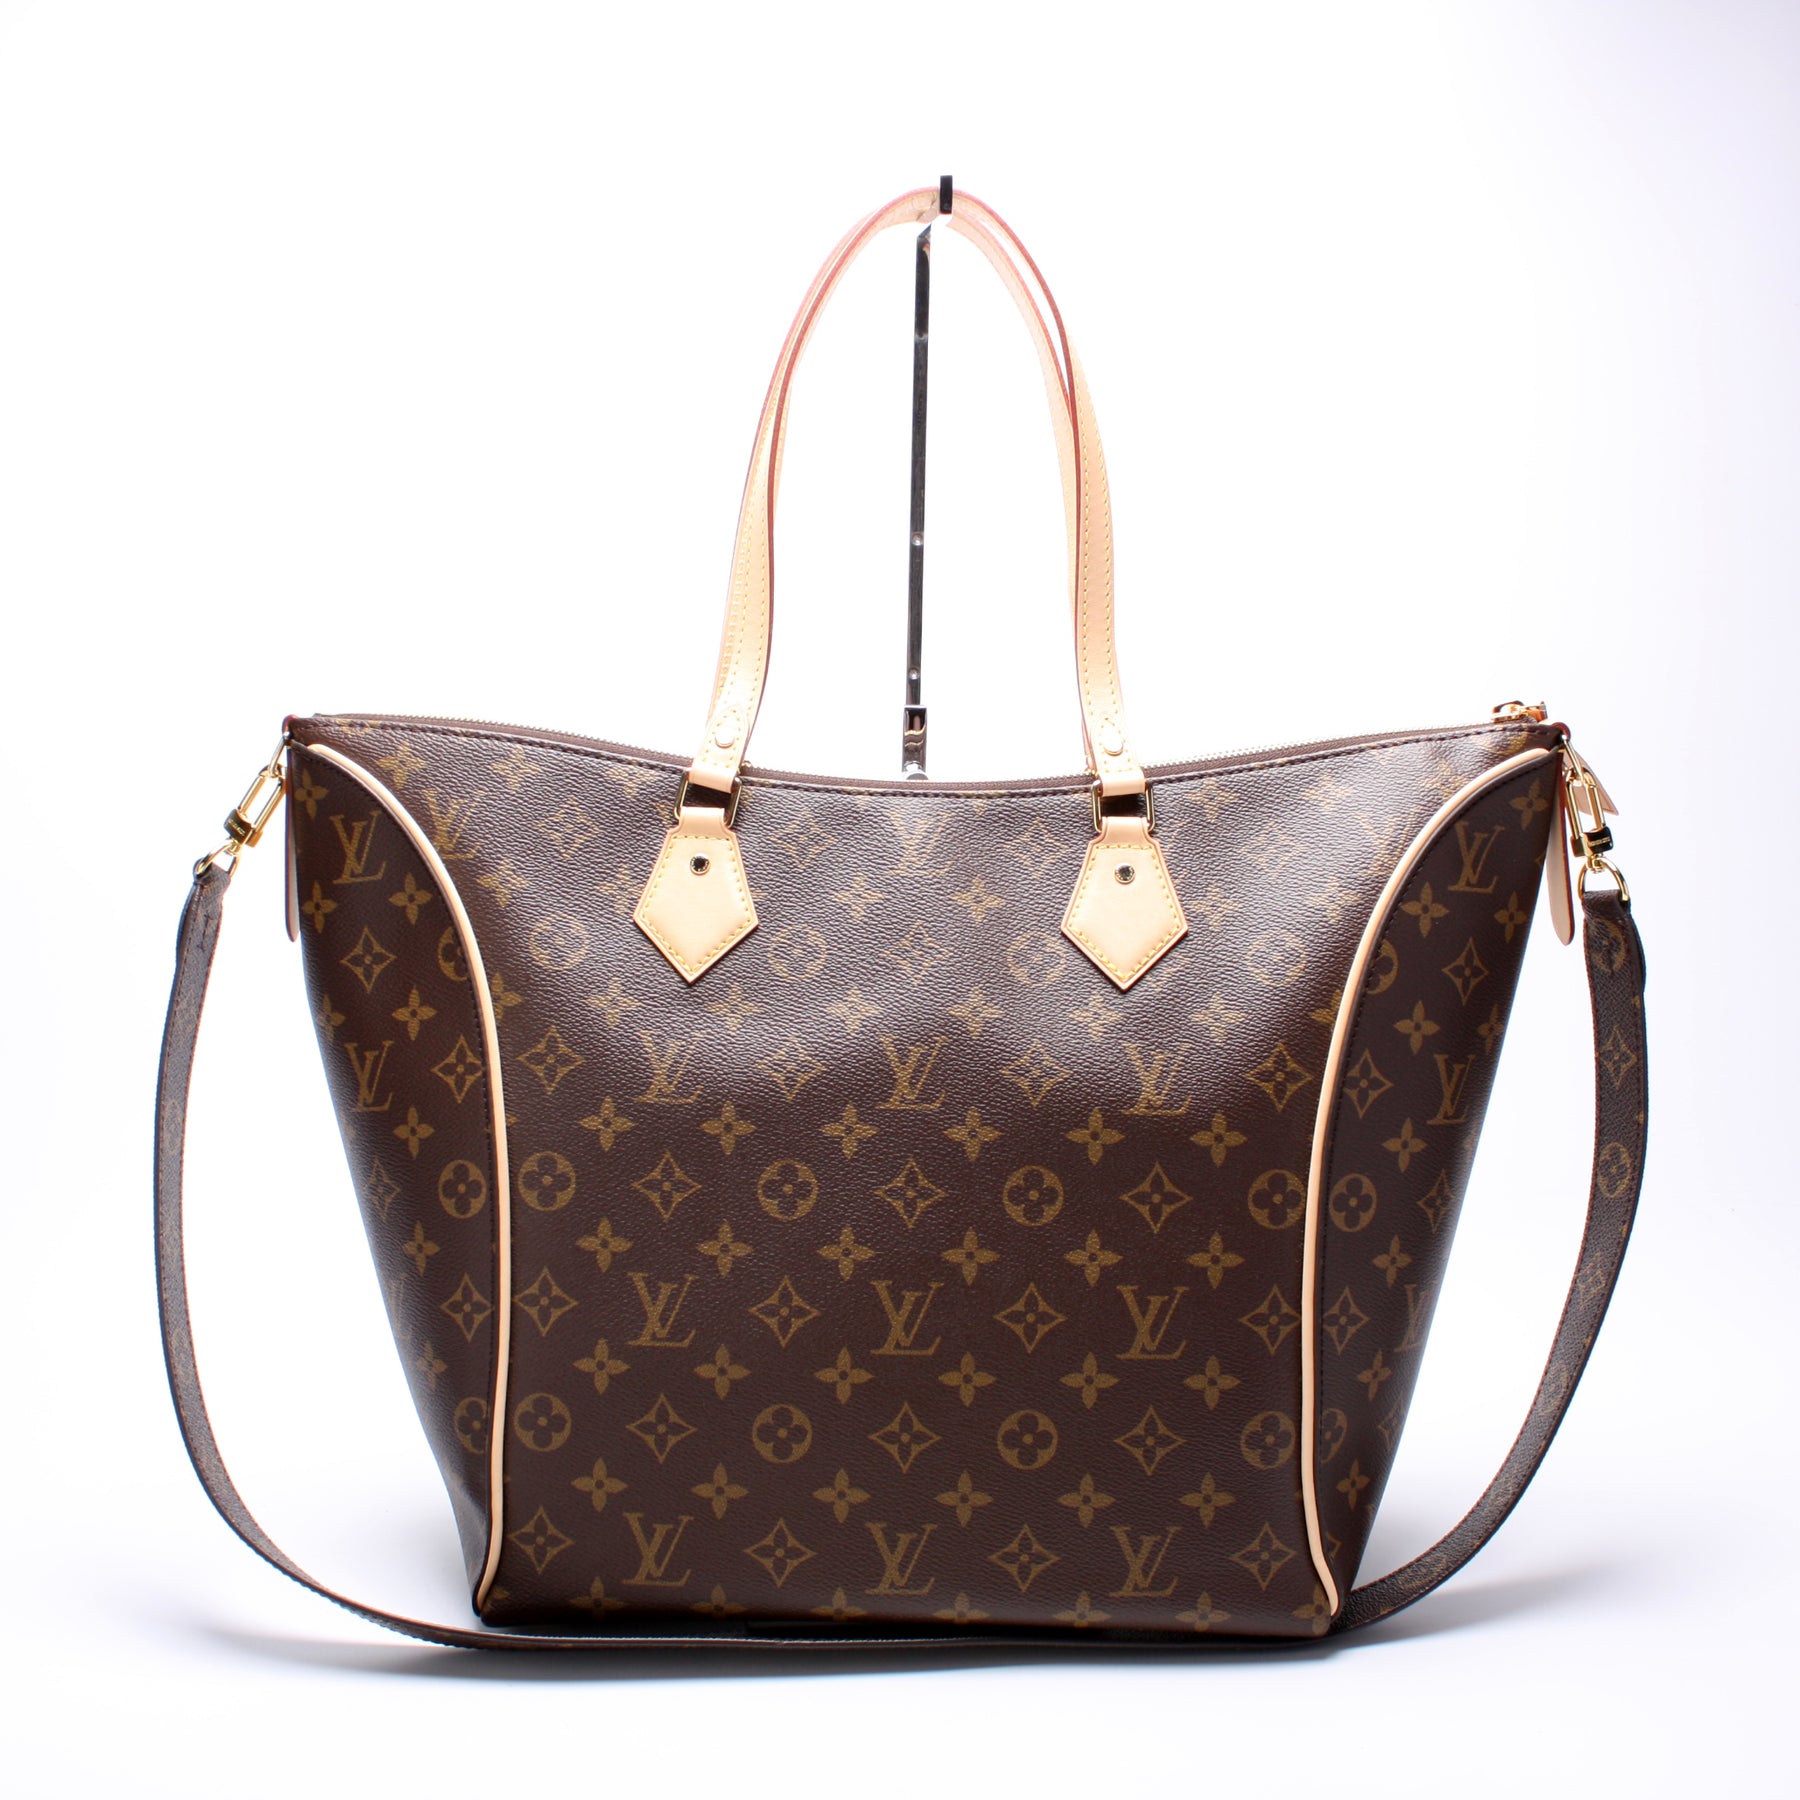 Authentic Louis Vuitton Tournelle MM bag for Sale in Allentown, PA